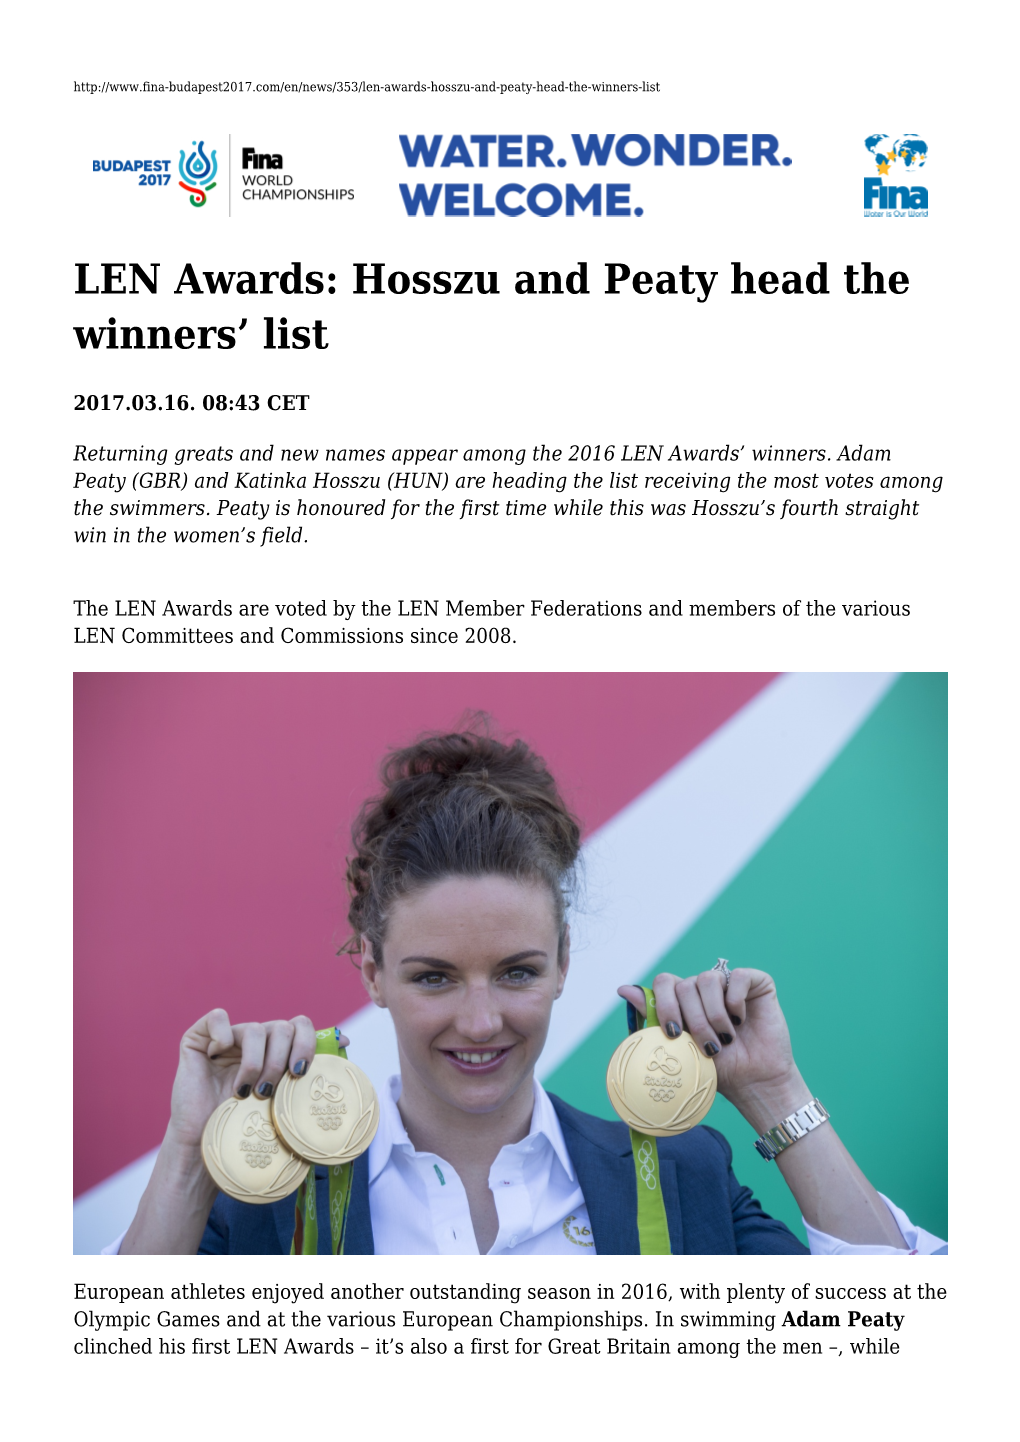 LEN Awards: Hosszu and Peaty Head the Winners' List